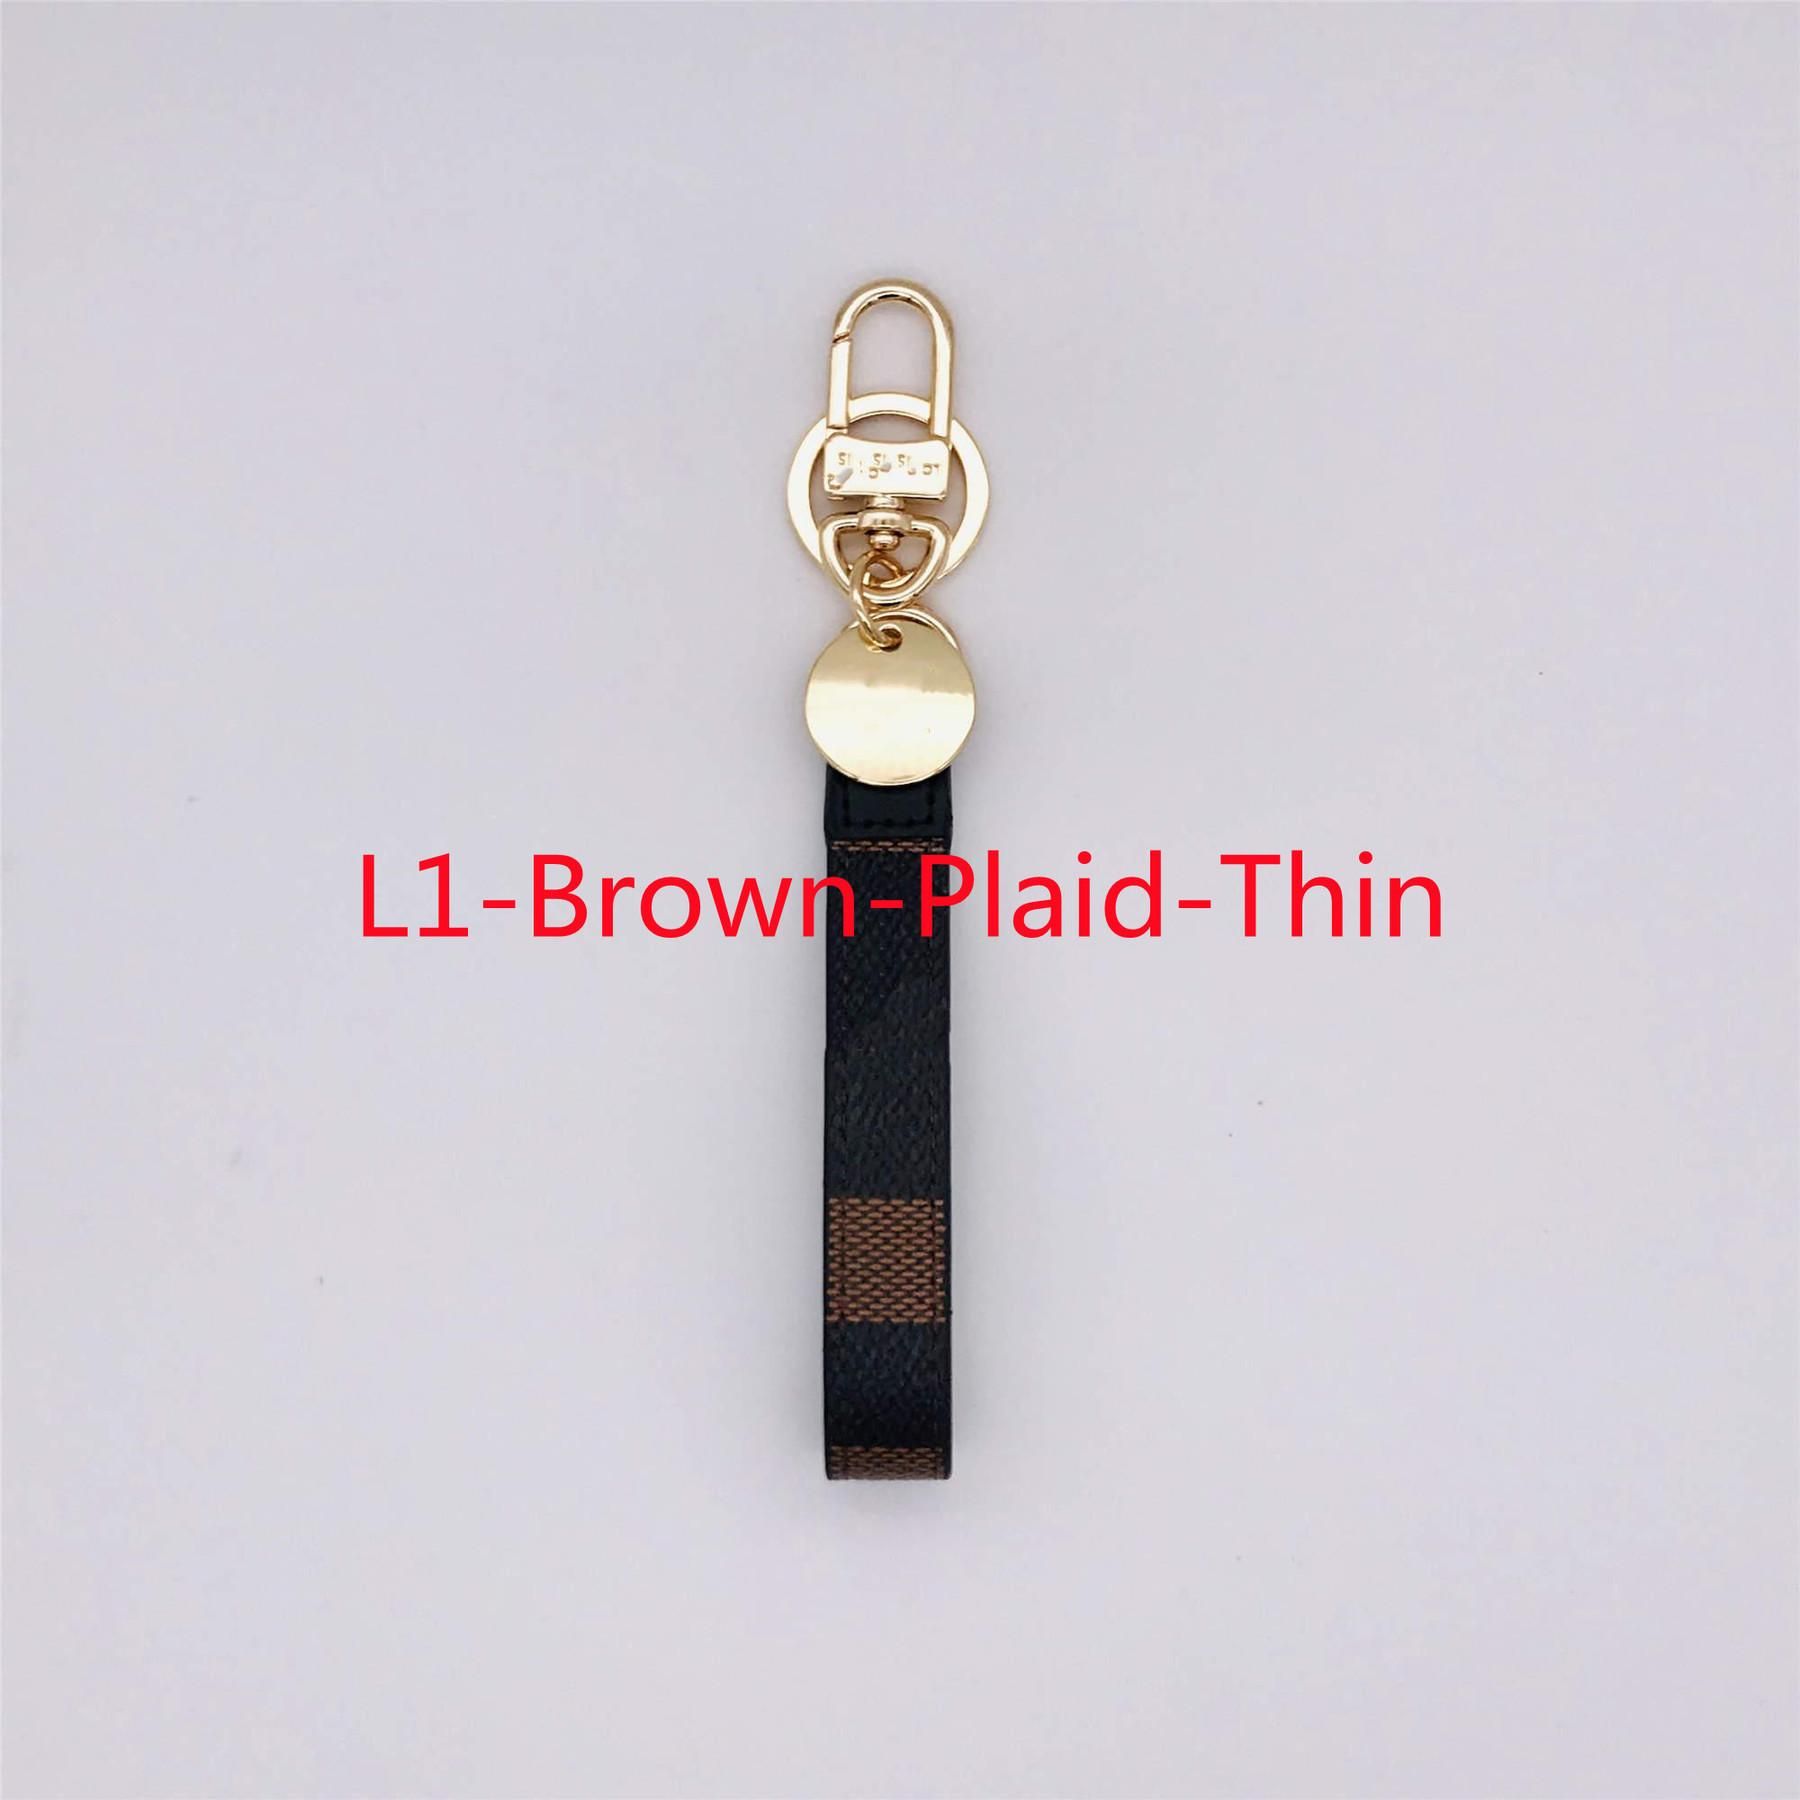 L1-Brown-Plaid-Thin